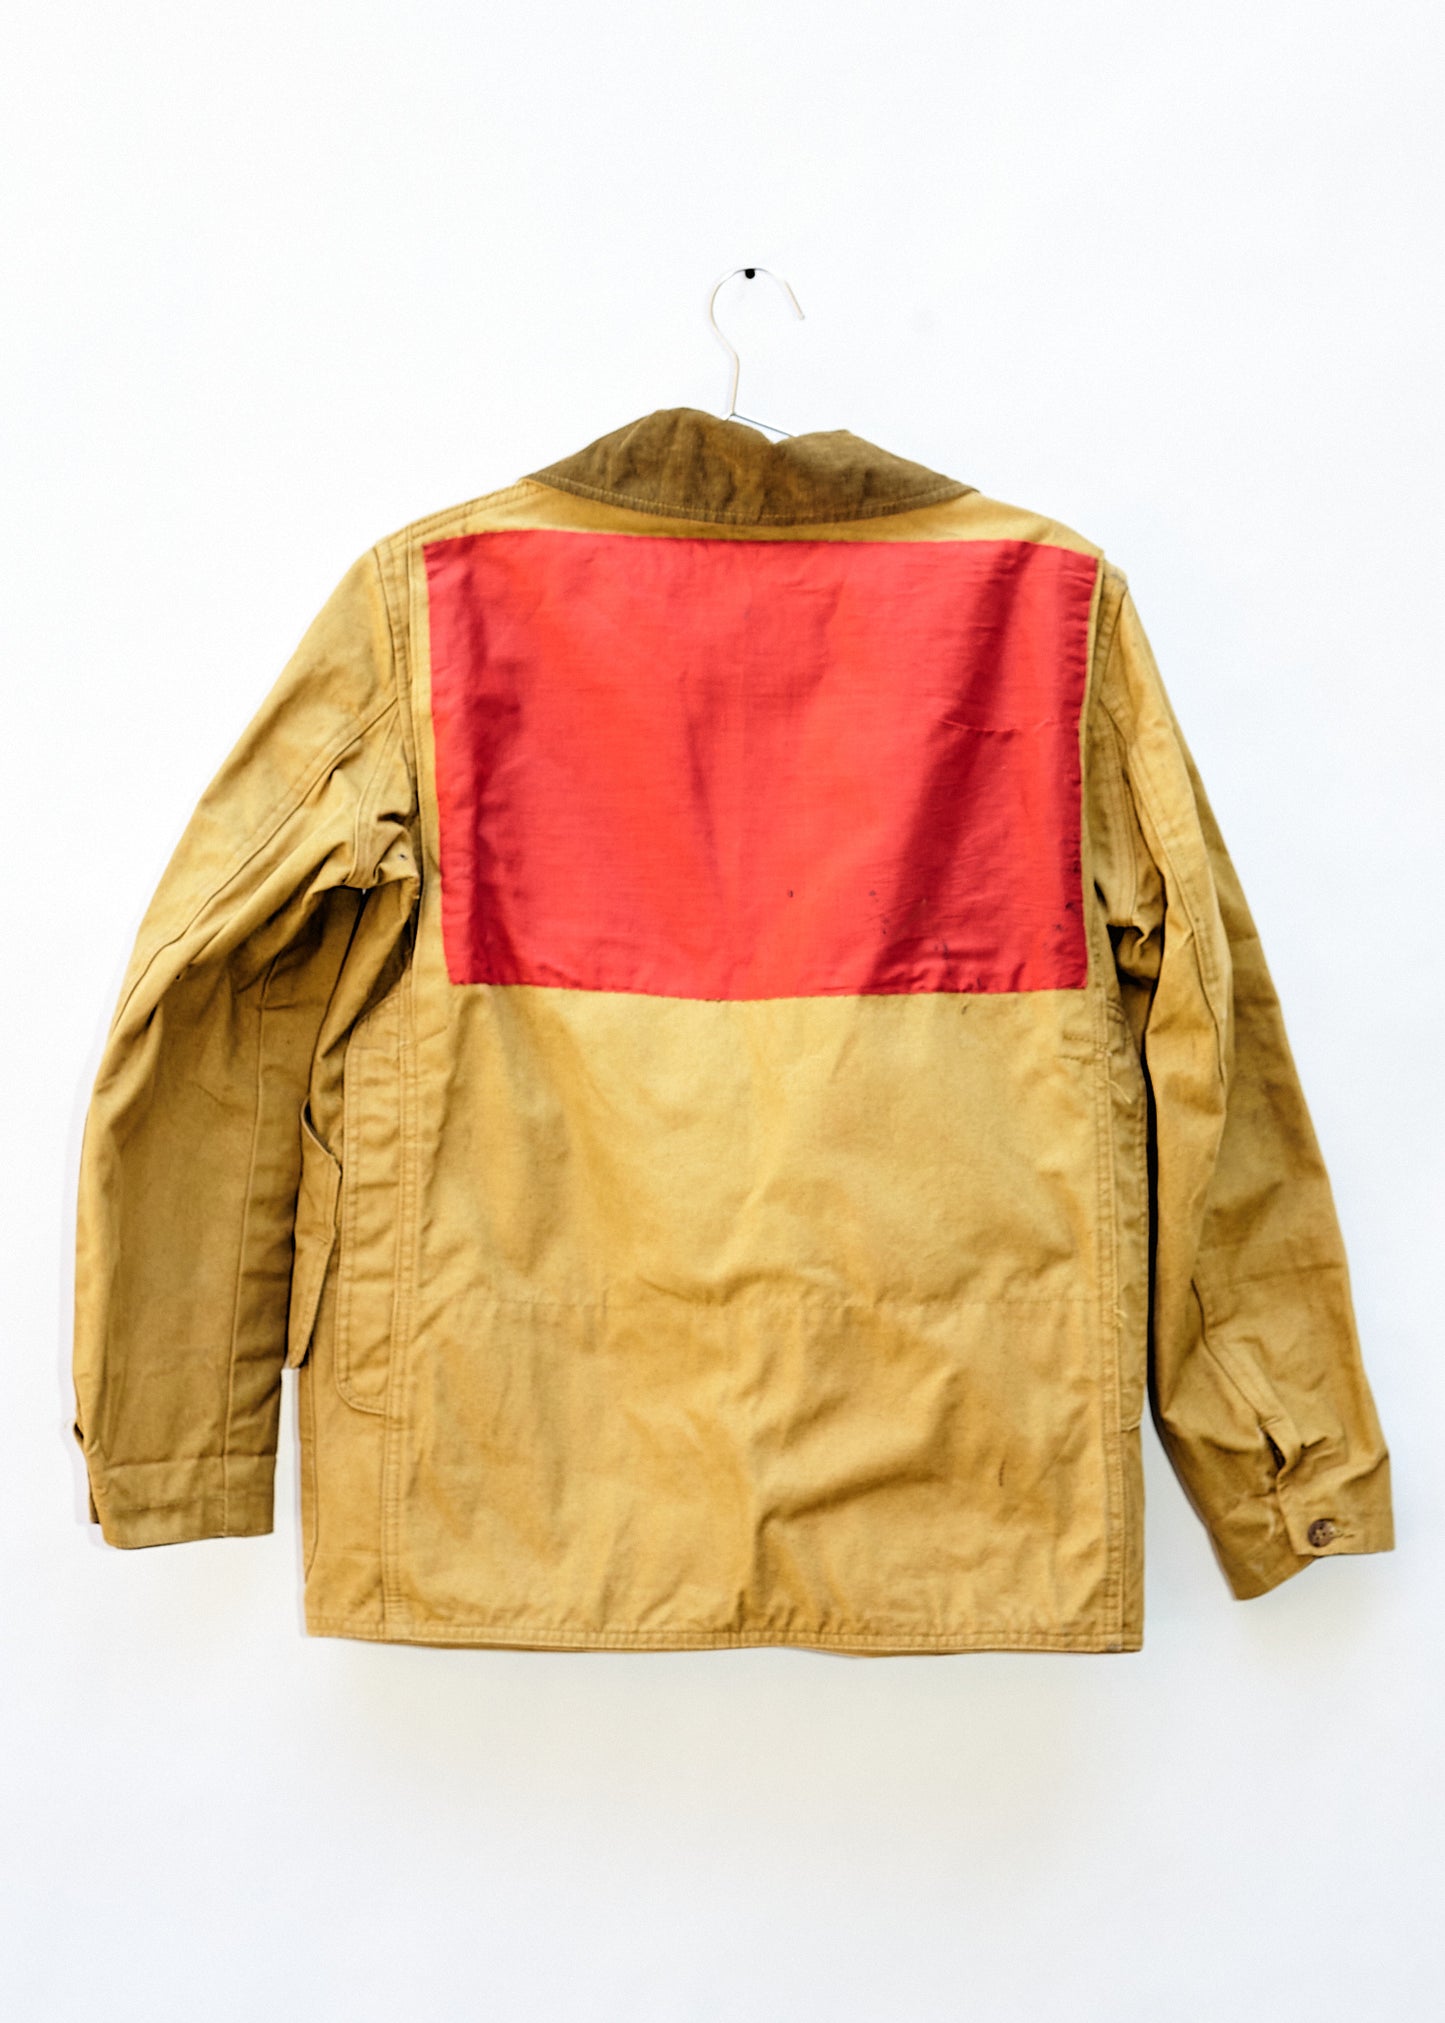 Heavyduty Workwear Yellow Jacket